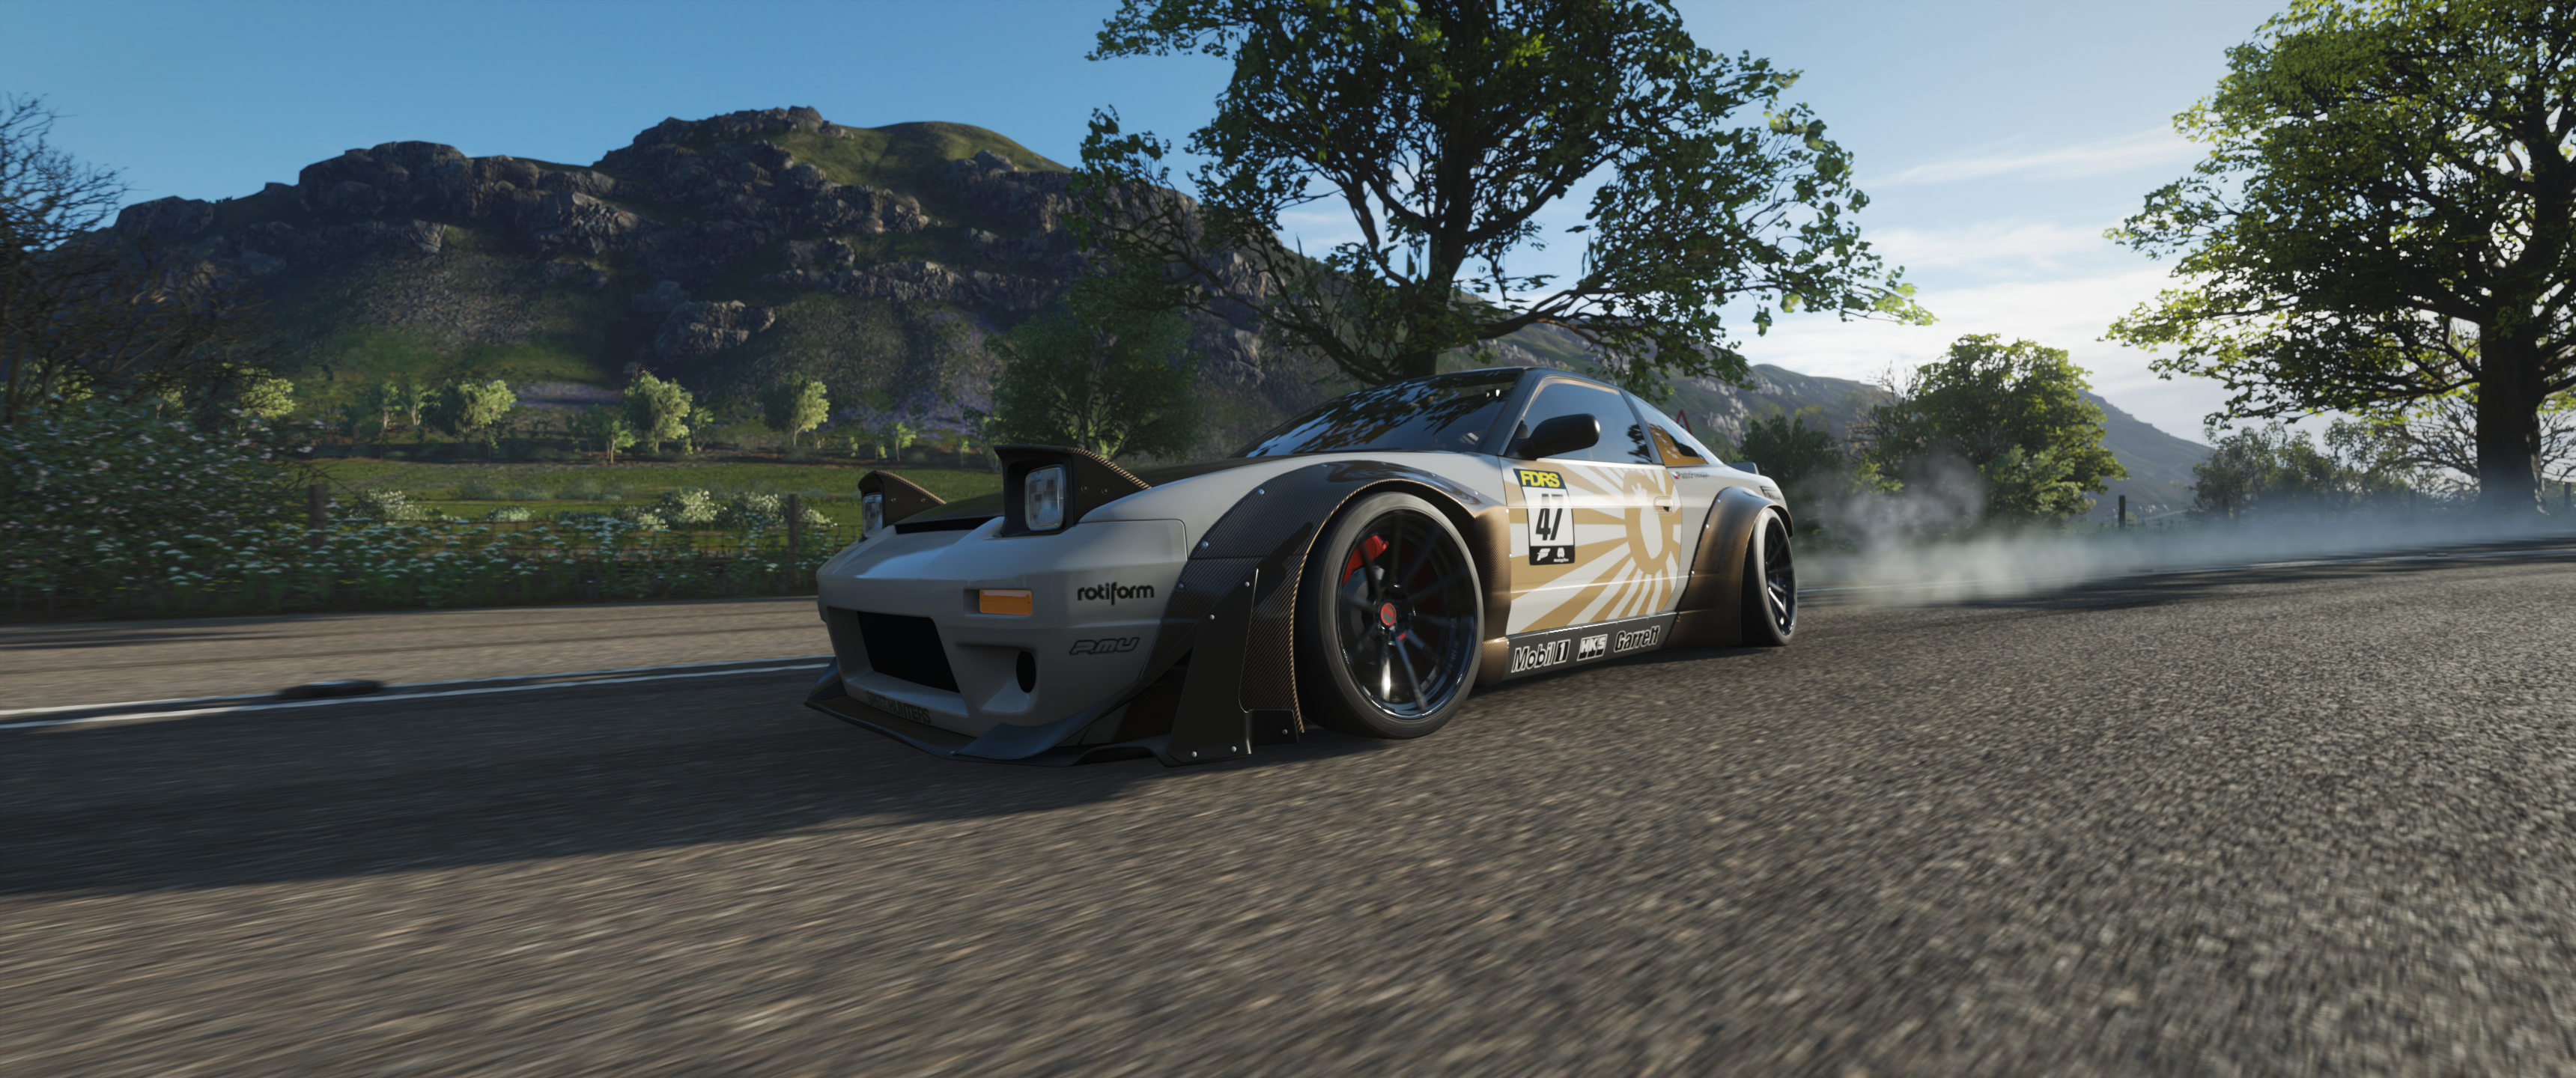 Forza Forza Horizon 4 Ultrawide Car Drift Drift Cars Drifting Video Games Nissan 240SX Nissan 240SX  3440x1440